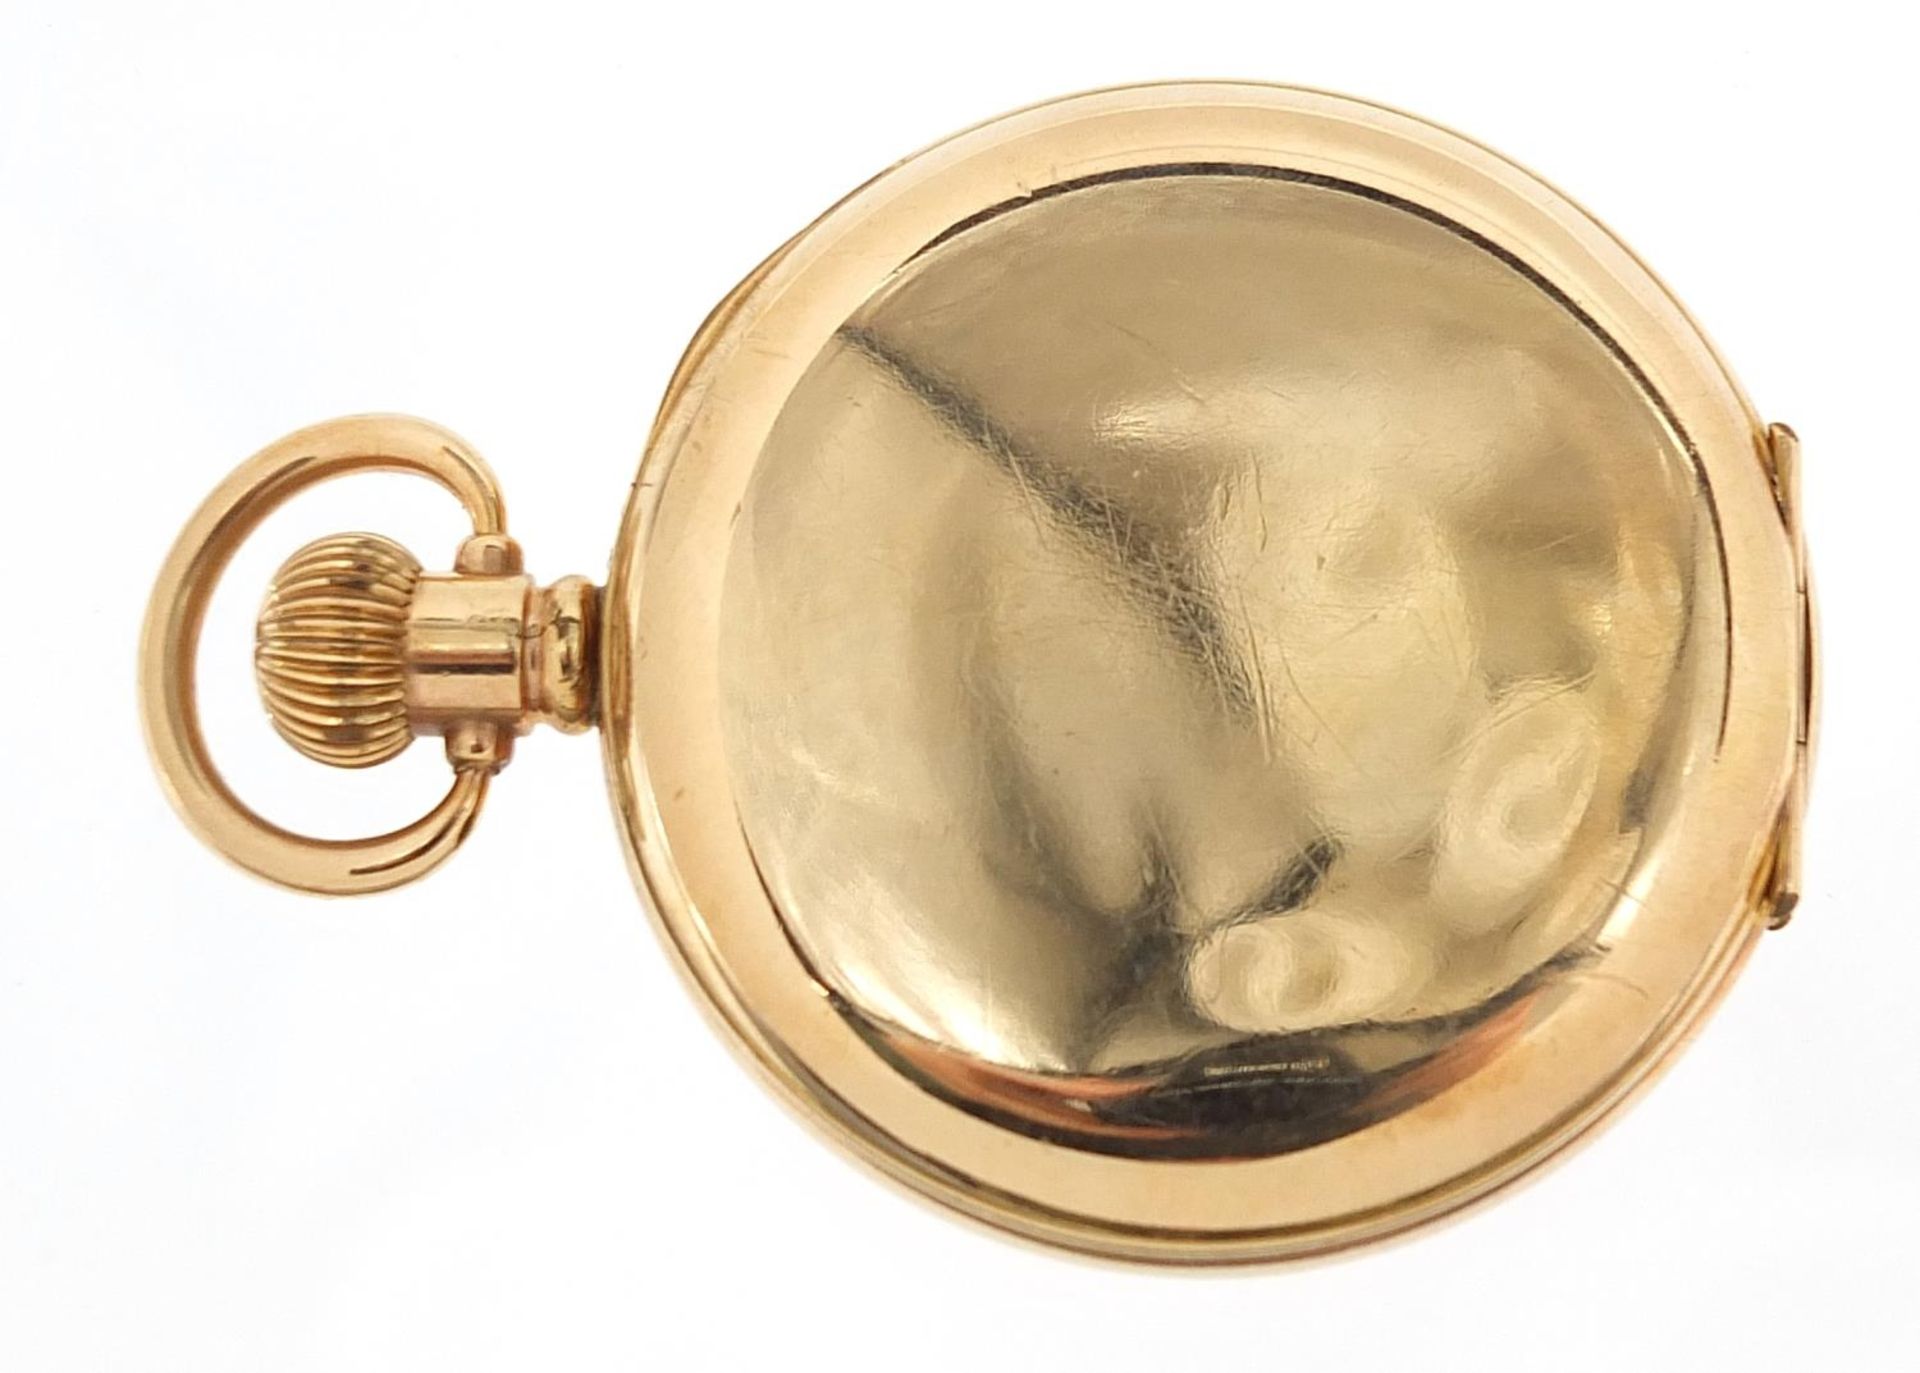 Gentlemen's gold plated half hunter pocket watch with enamelled dial, 50mm in diameter - Image 3 of 6